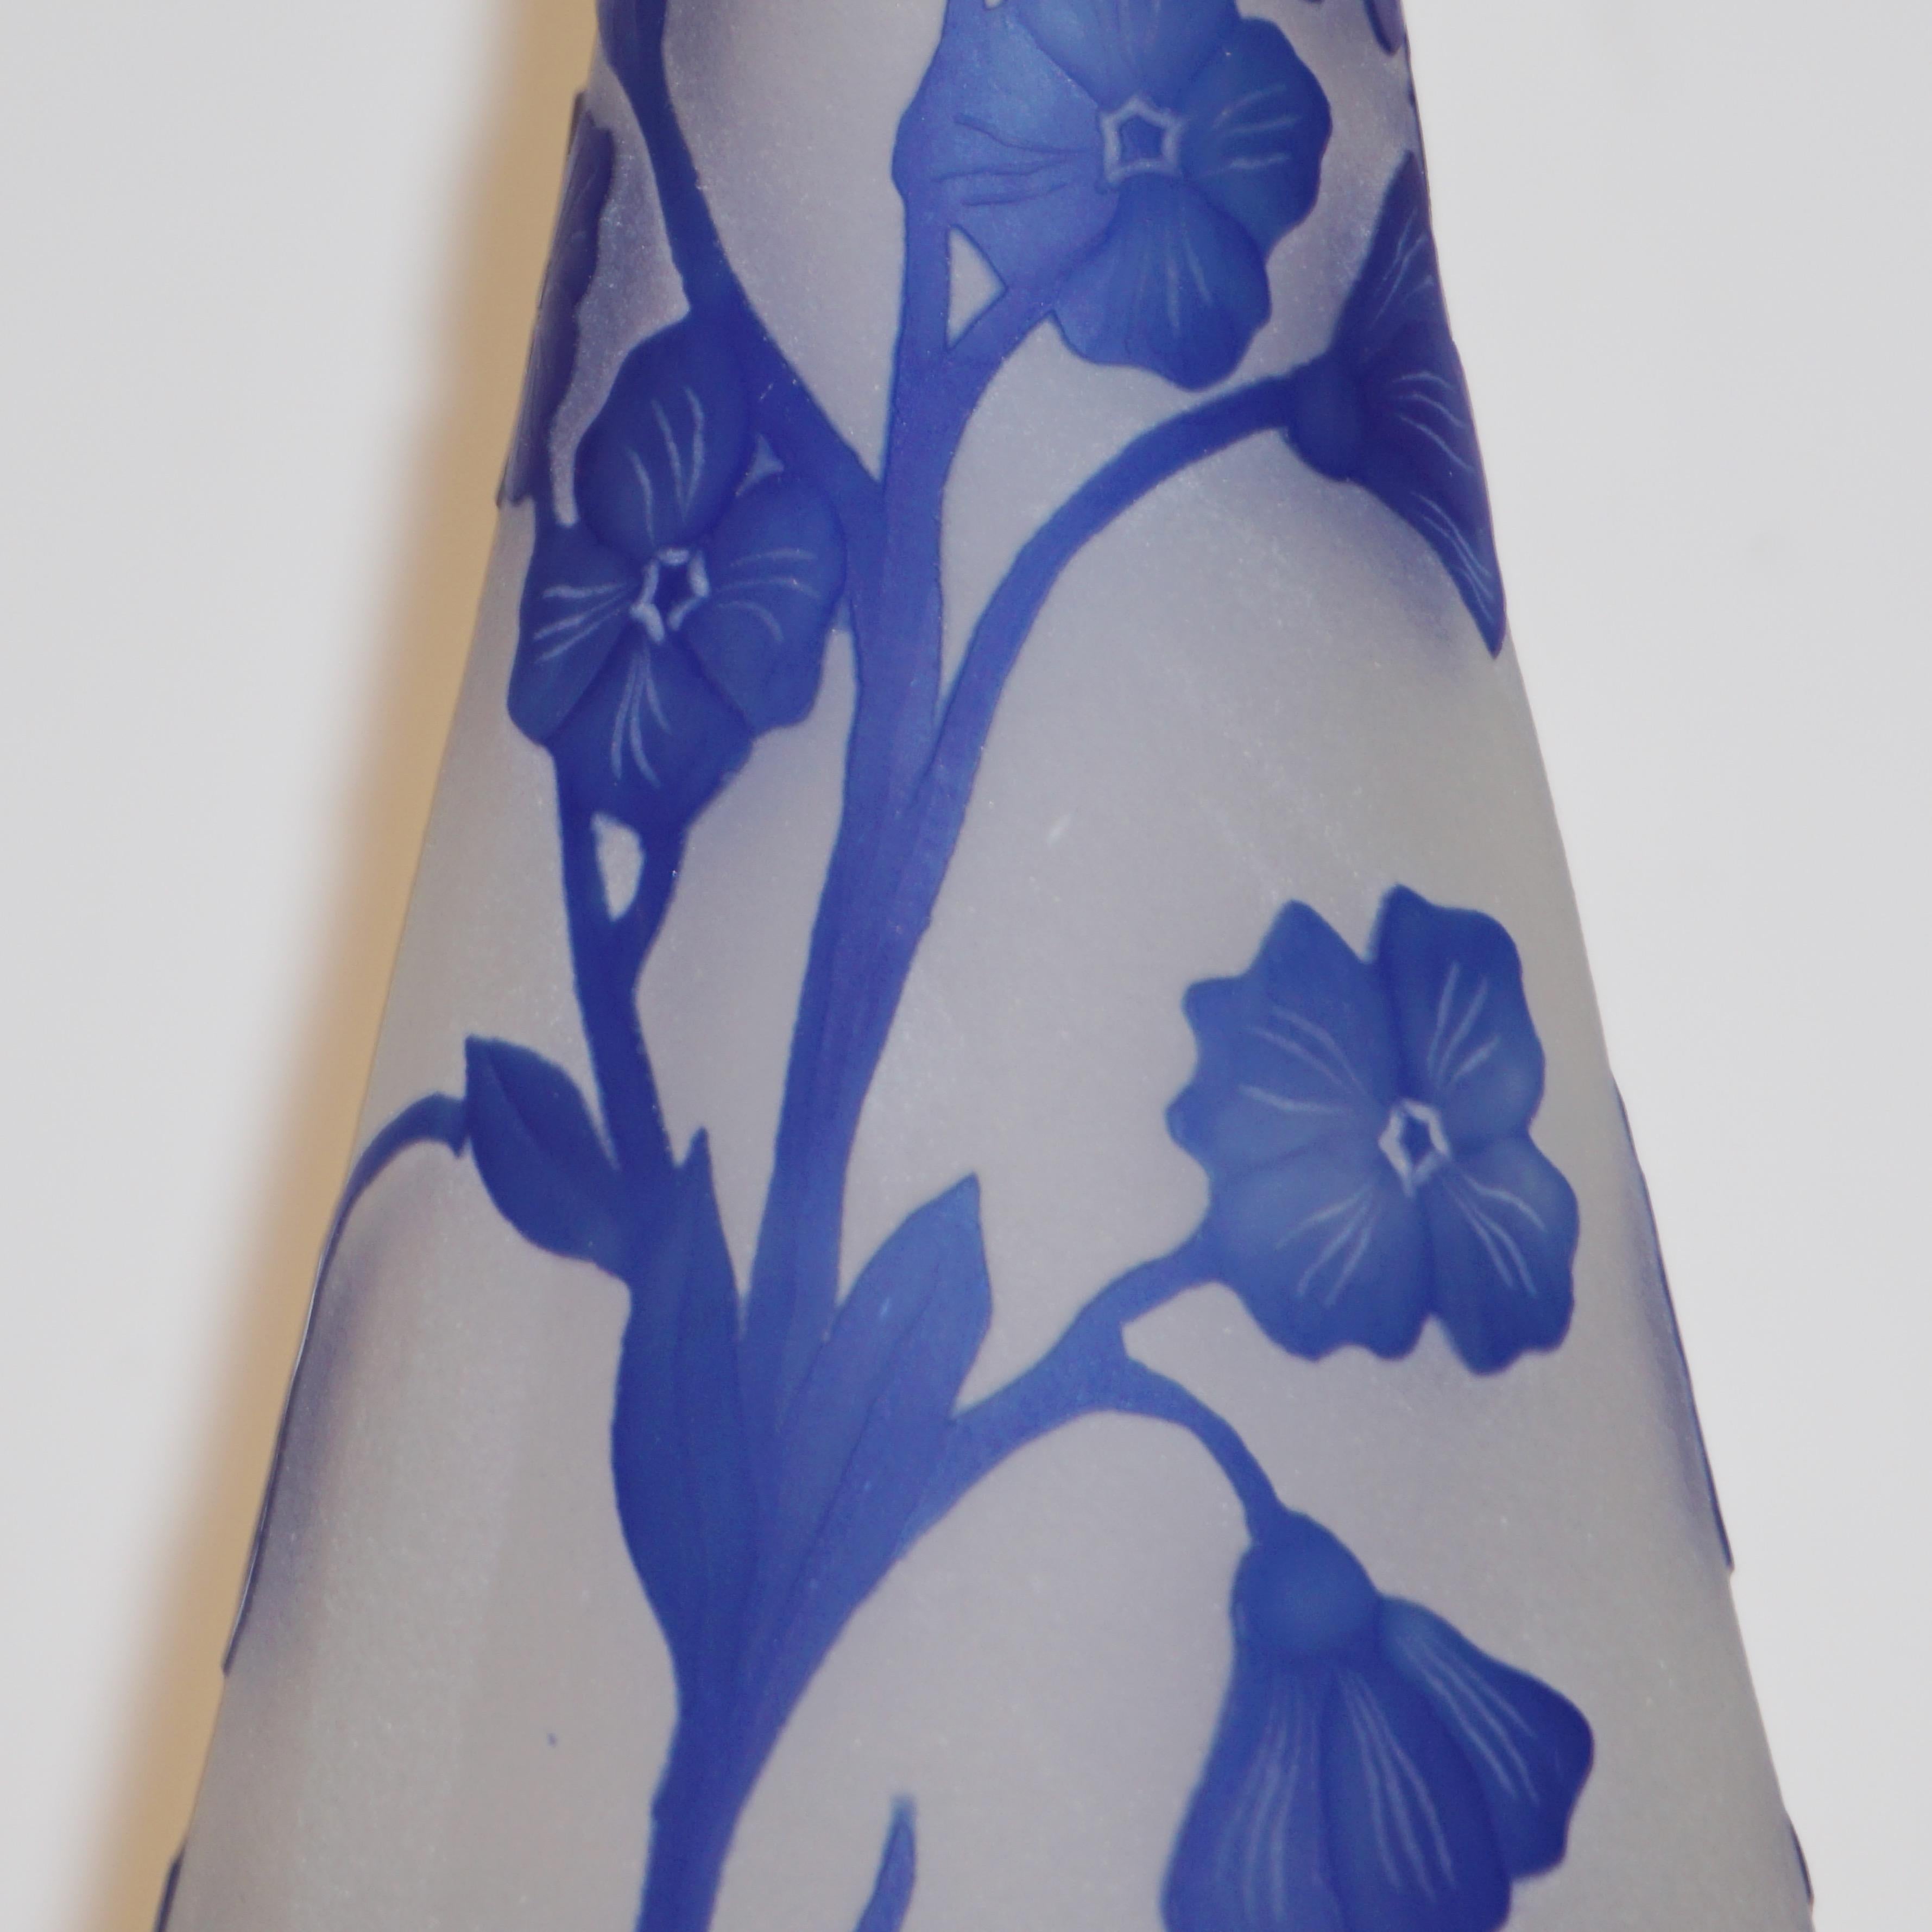 1970s Austrian Art Nouveau Style Crystal Glass Vase with Blue Flax Flowers 2